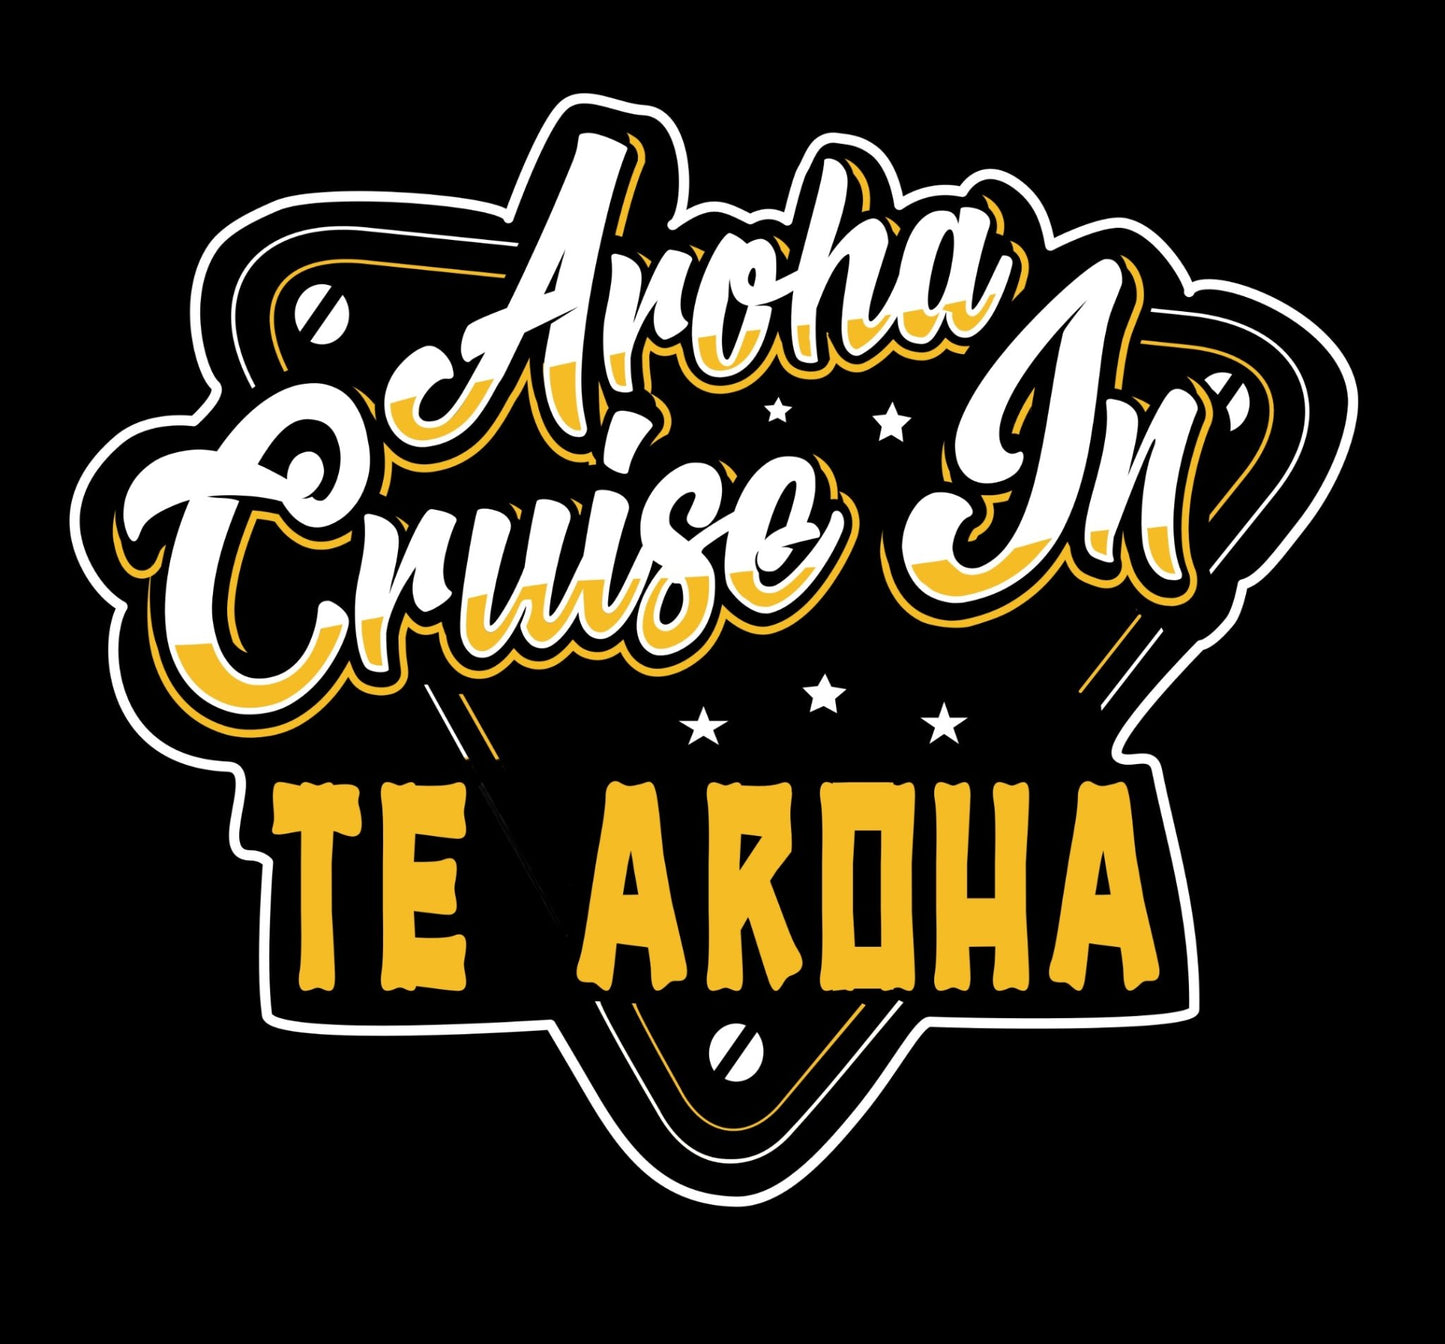 Aroha Cruise In - Sunrise